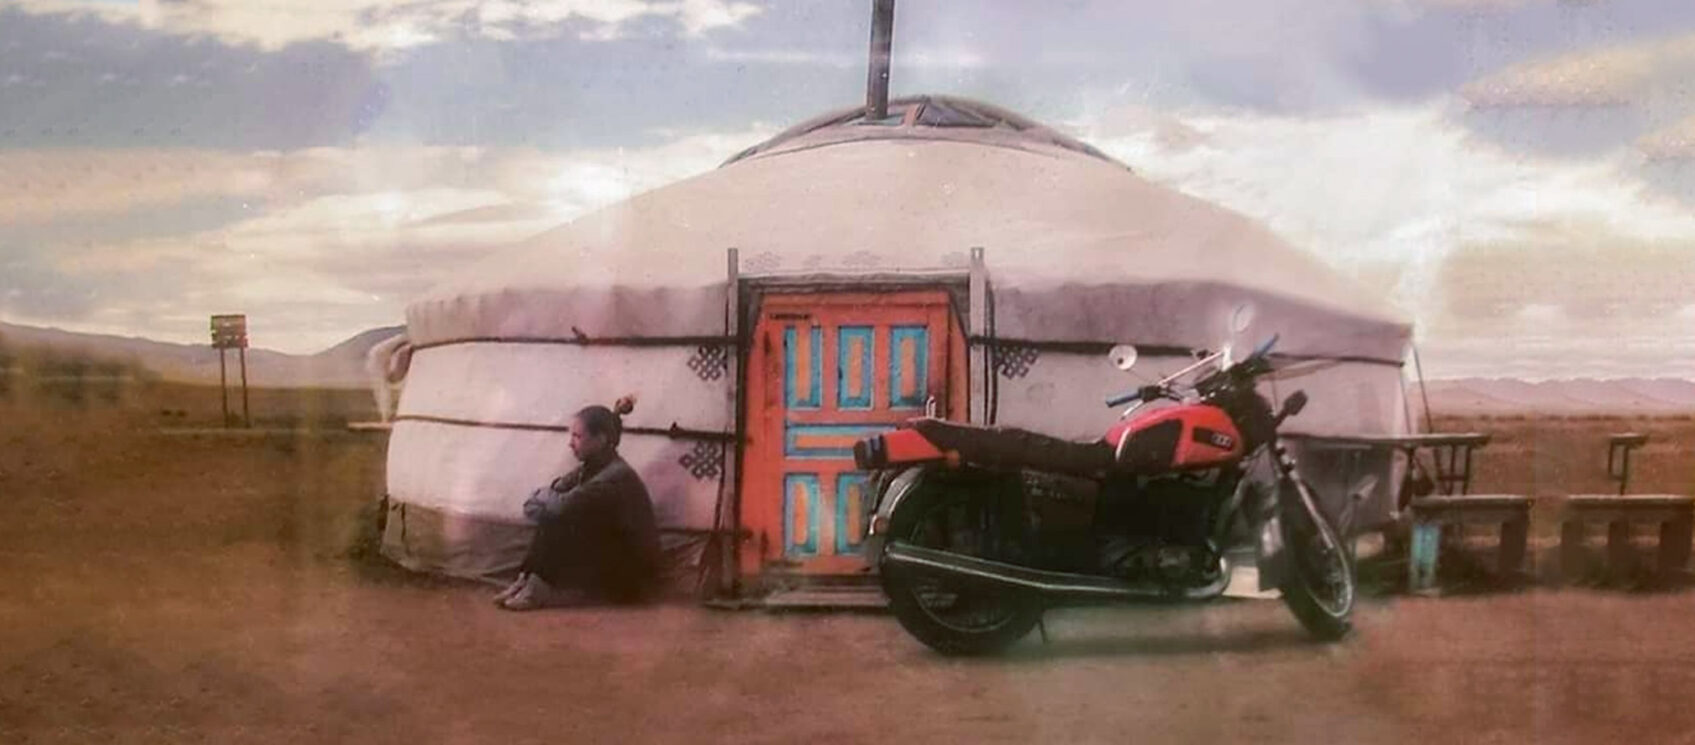 girl sitting next to Mongolian yurt